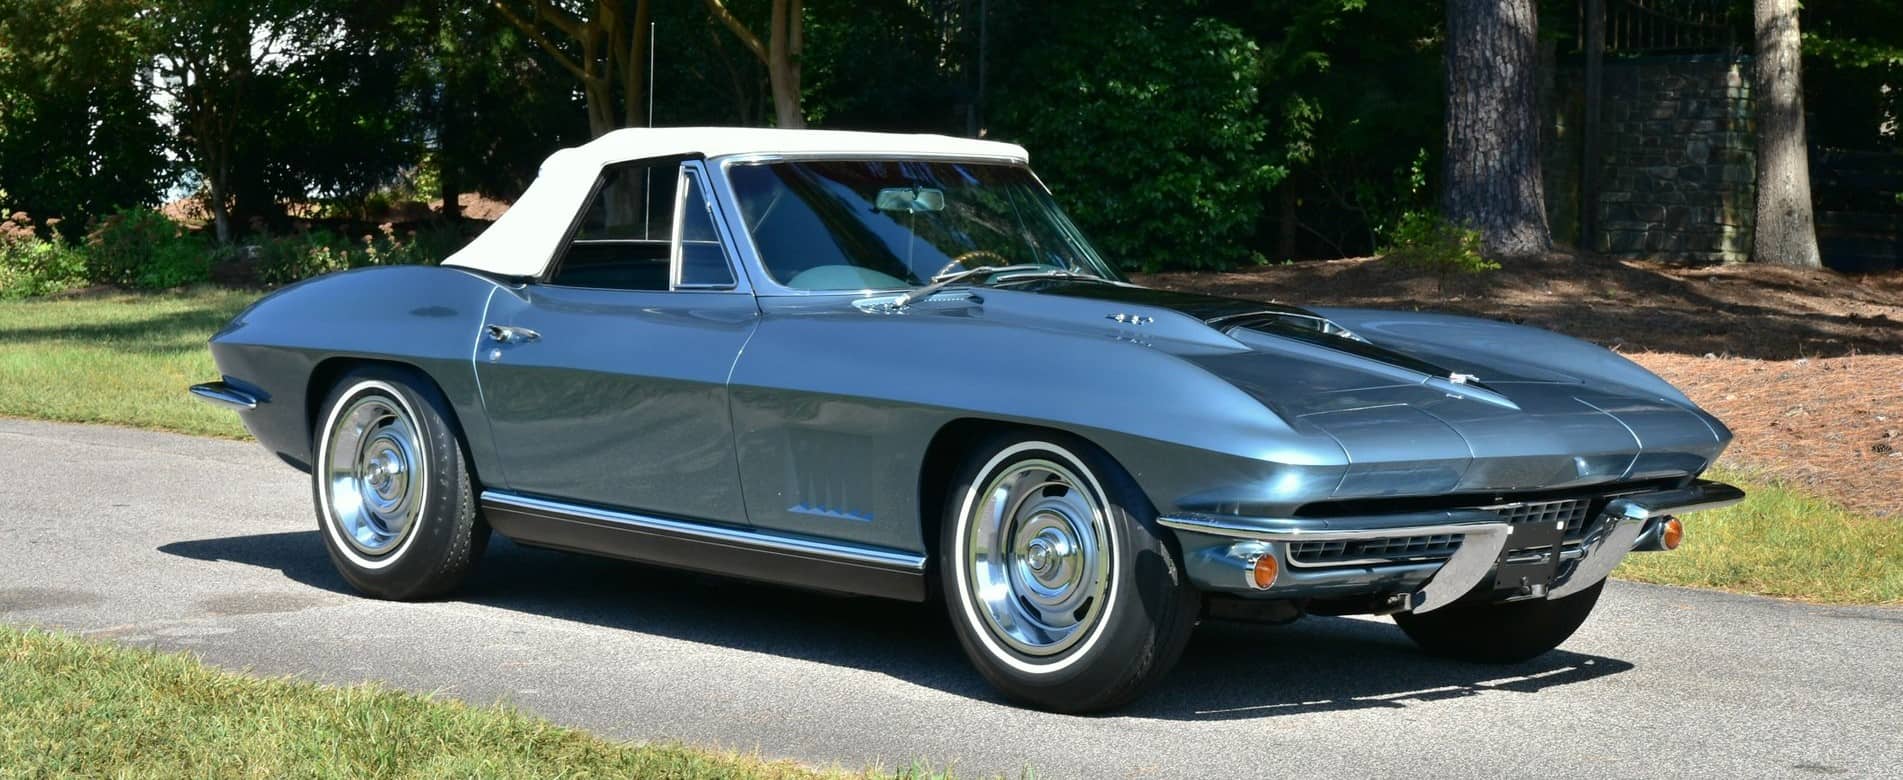 1967 Chevrolet Corvette Raleigh Classic Auction